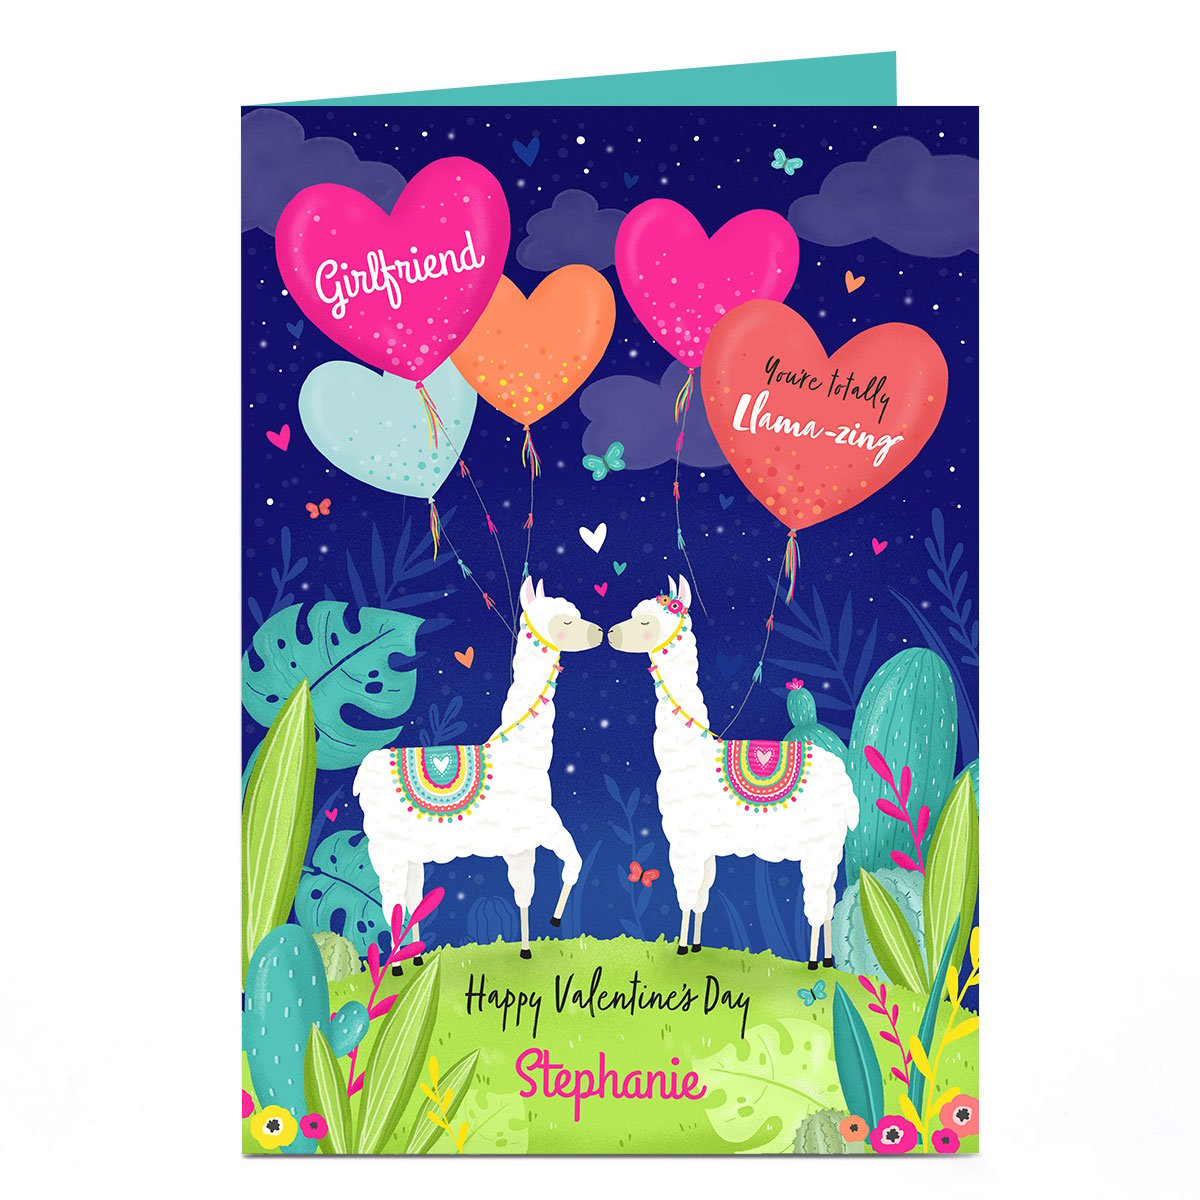 Personalised Valentine's Day Card - Girlfriend, Llama-zing